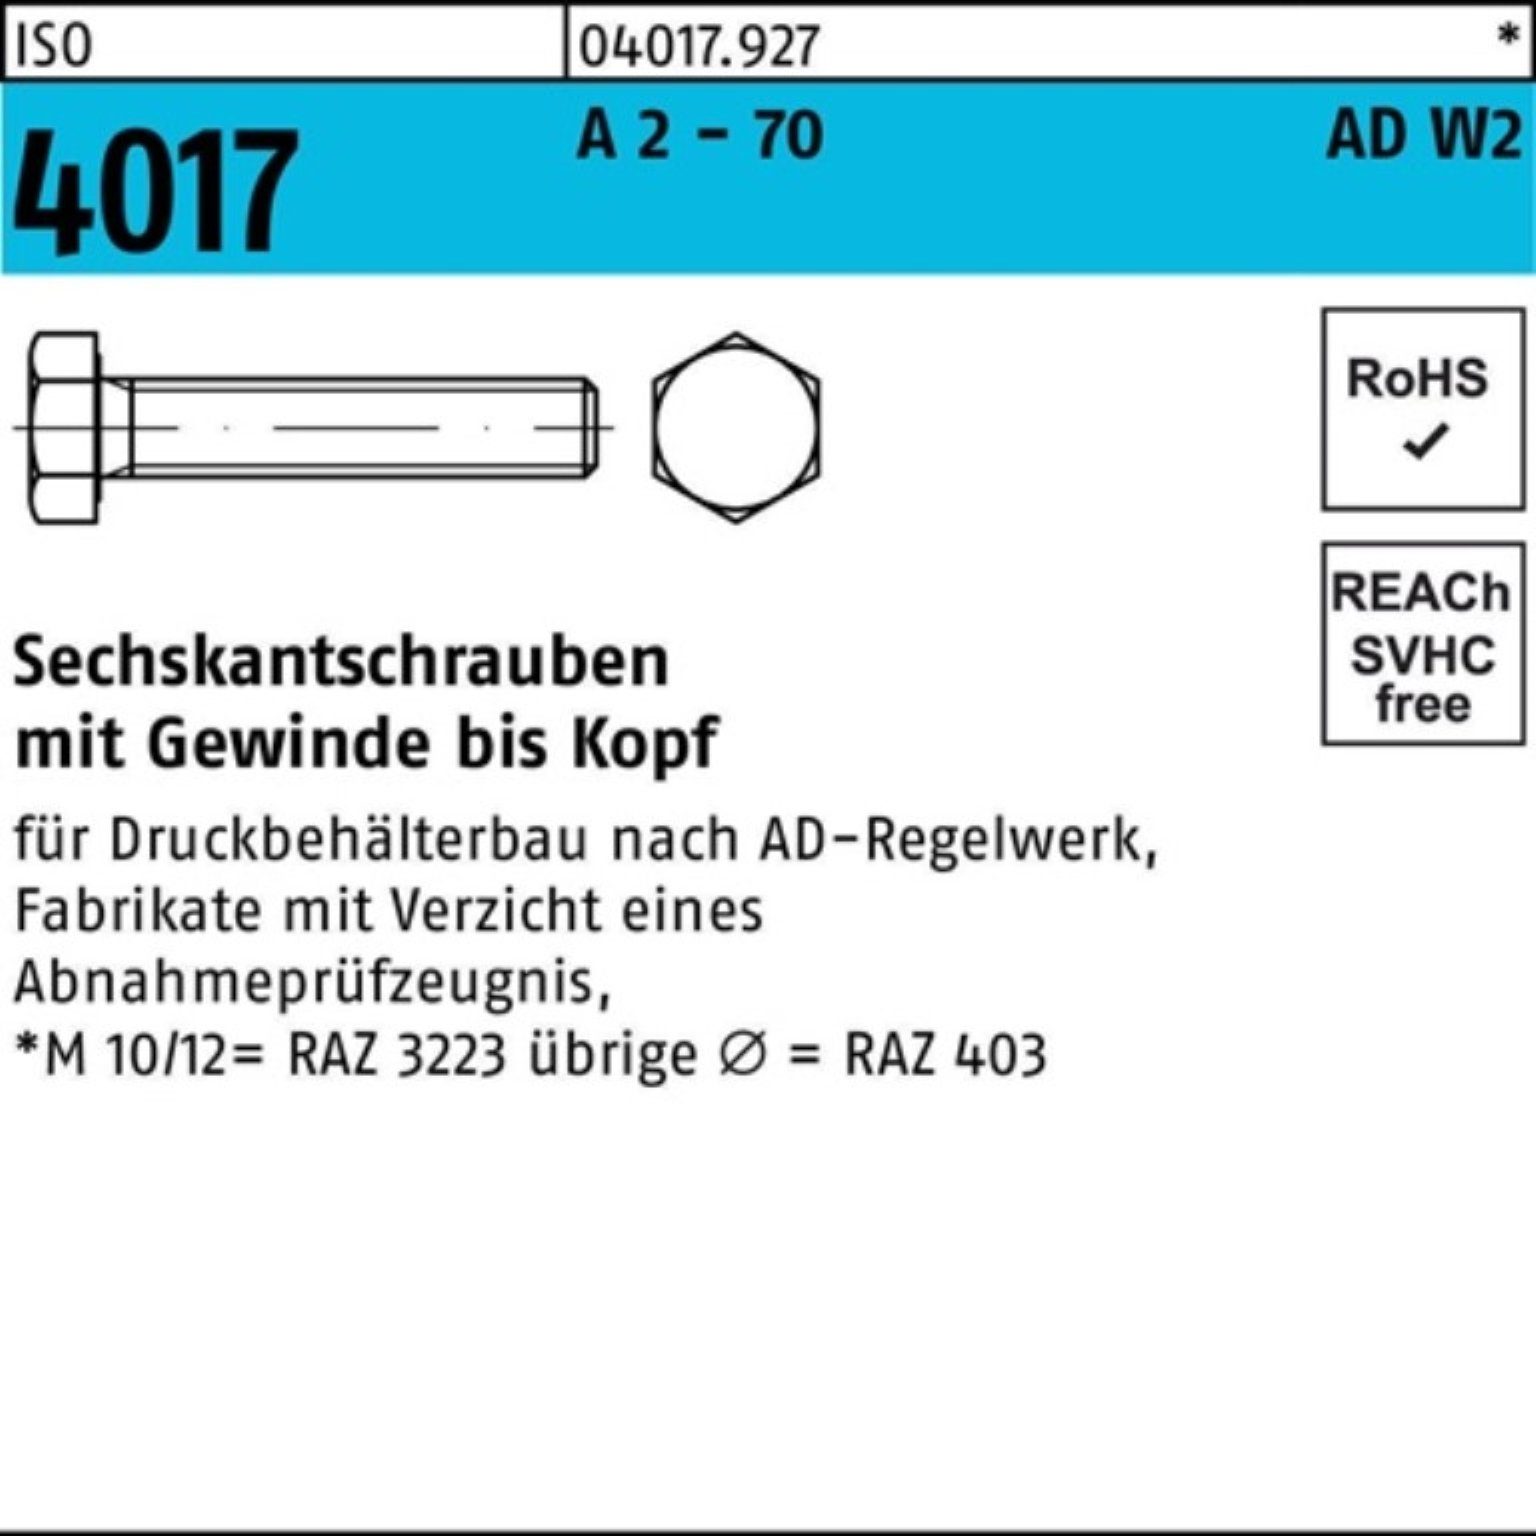 Bufab Sechskantschraube 100er Pack Sechskantschraube 2 ISO St VG 4017 100 - 70 AD-W2 M10x 45 A